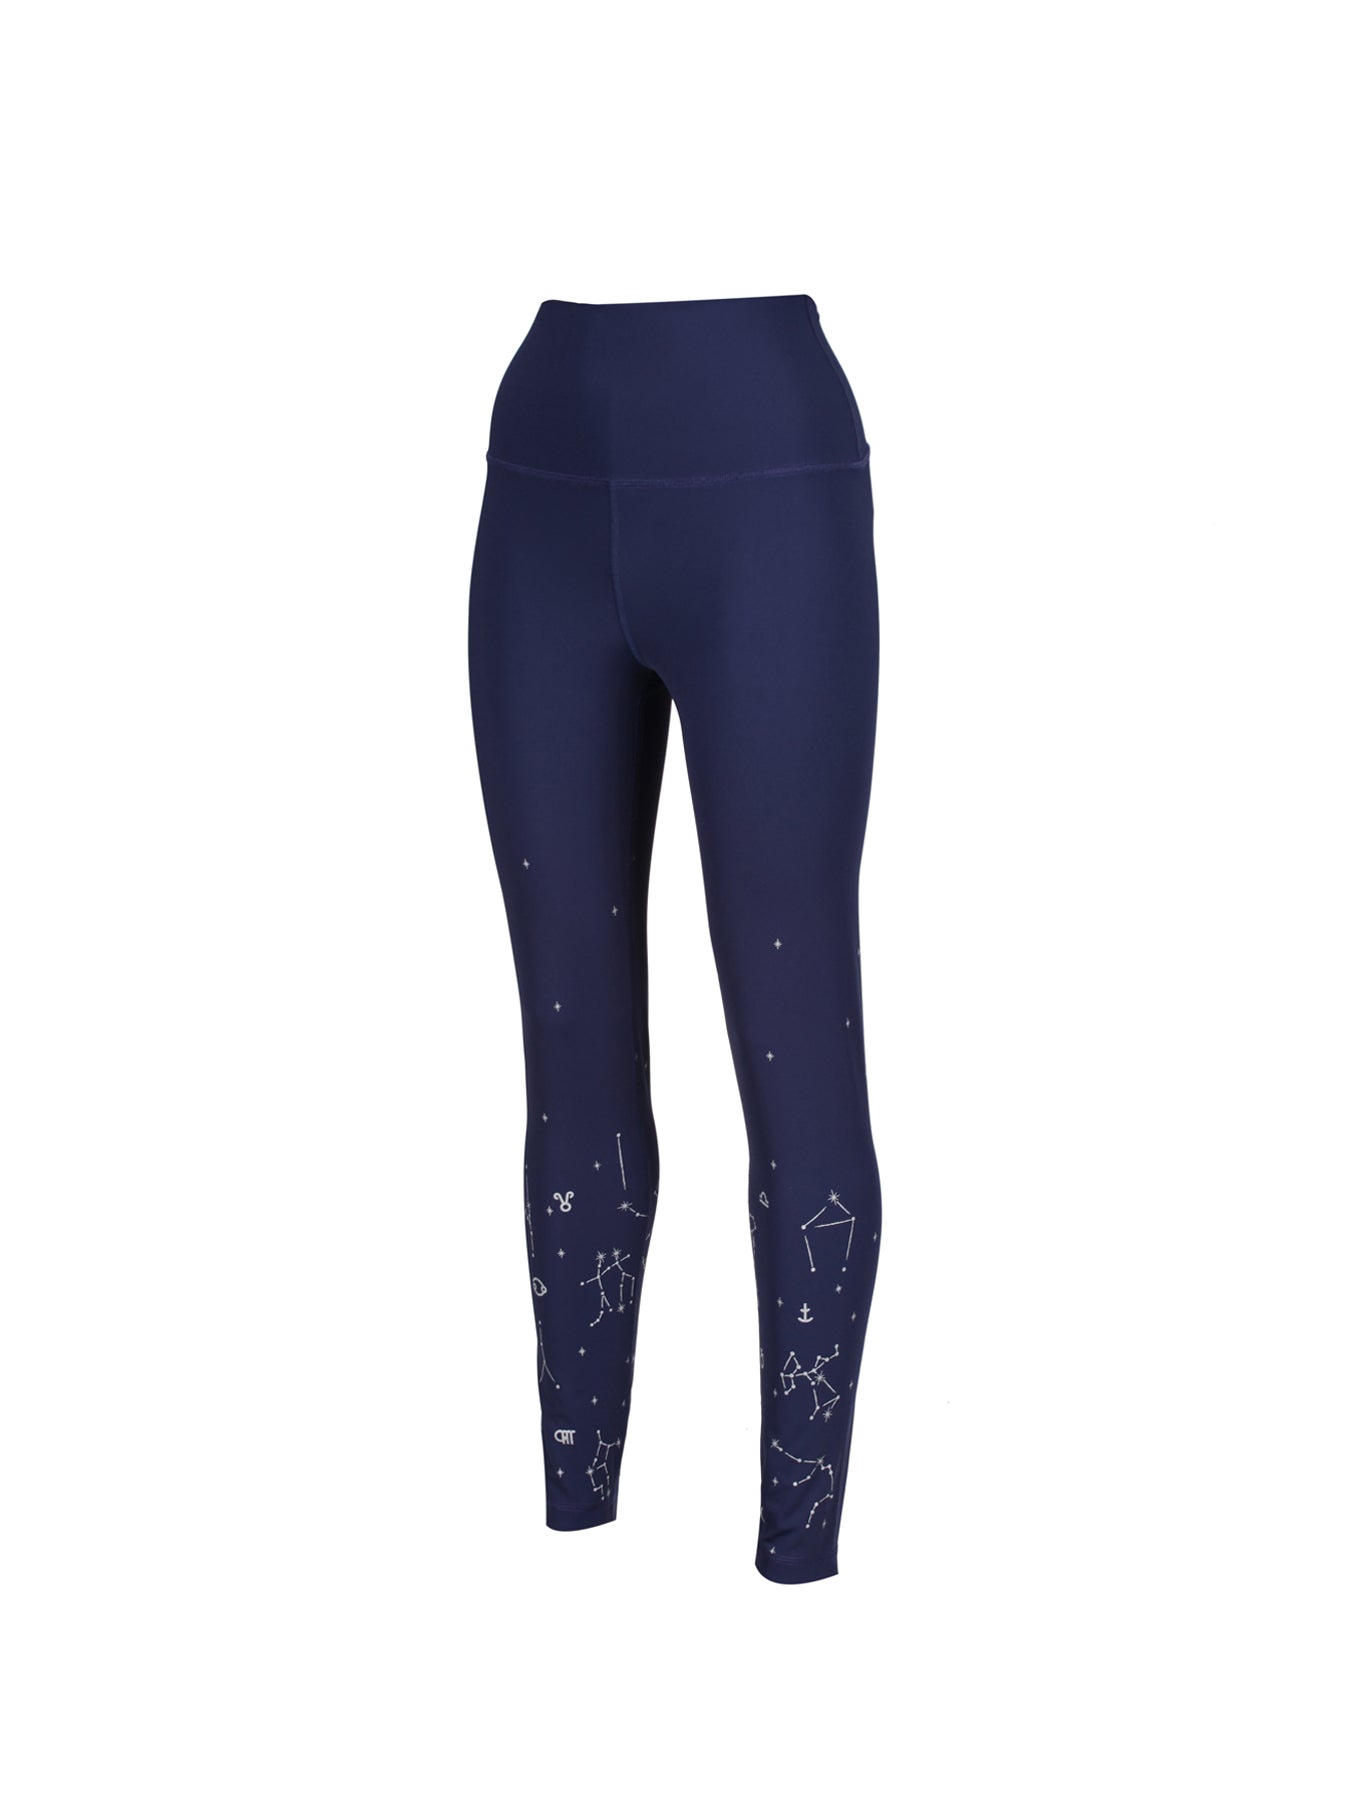 Blue Herringbone Knitted Pattern Leggings for Women, Yoga Pants, Workout  Leggings, Printed Leggings, Hight Waist Leggings, Yoga Clothing -  UK